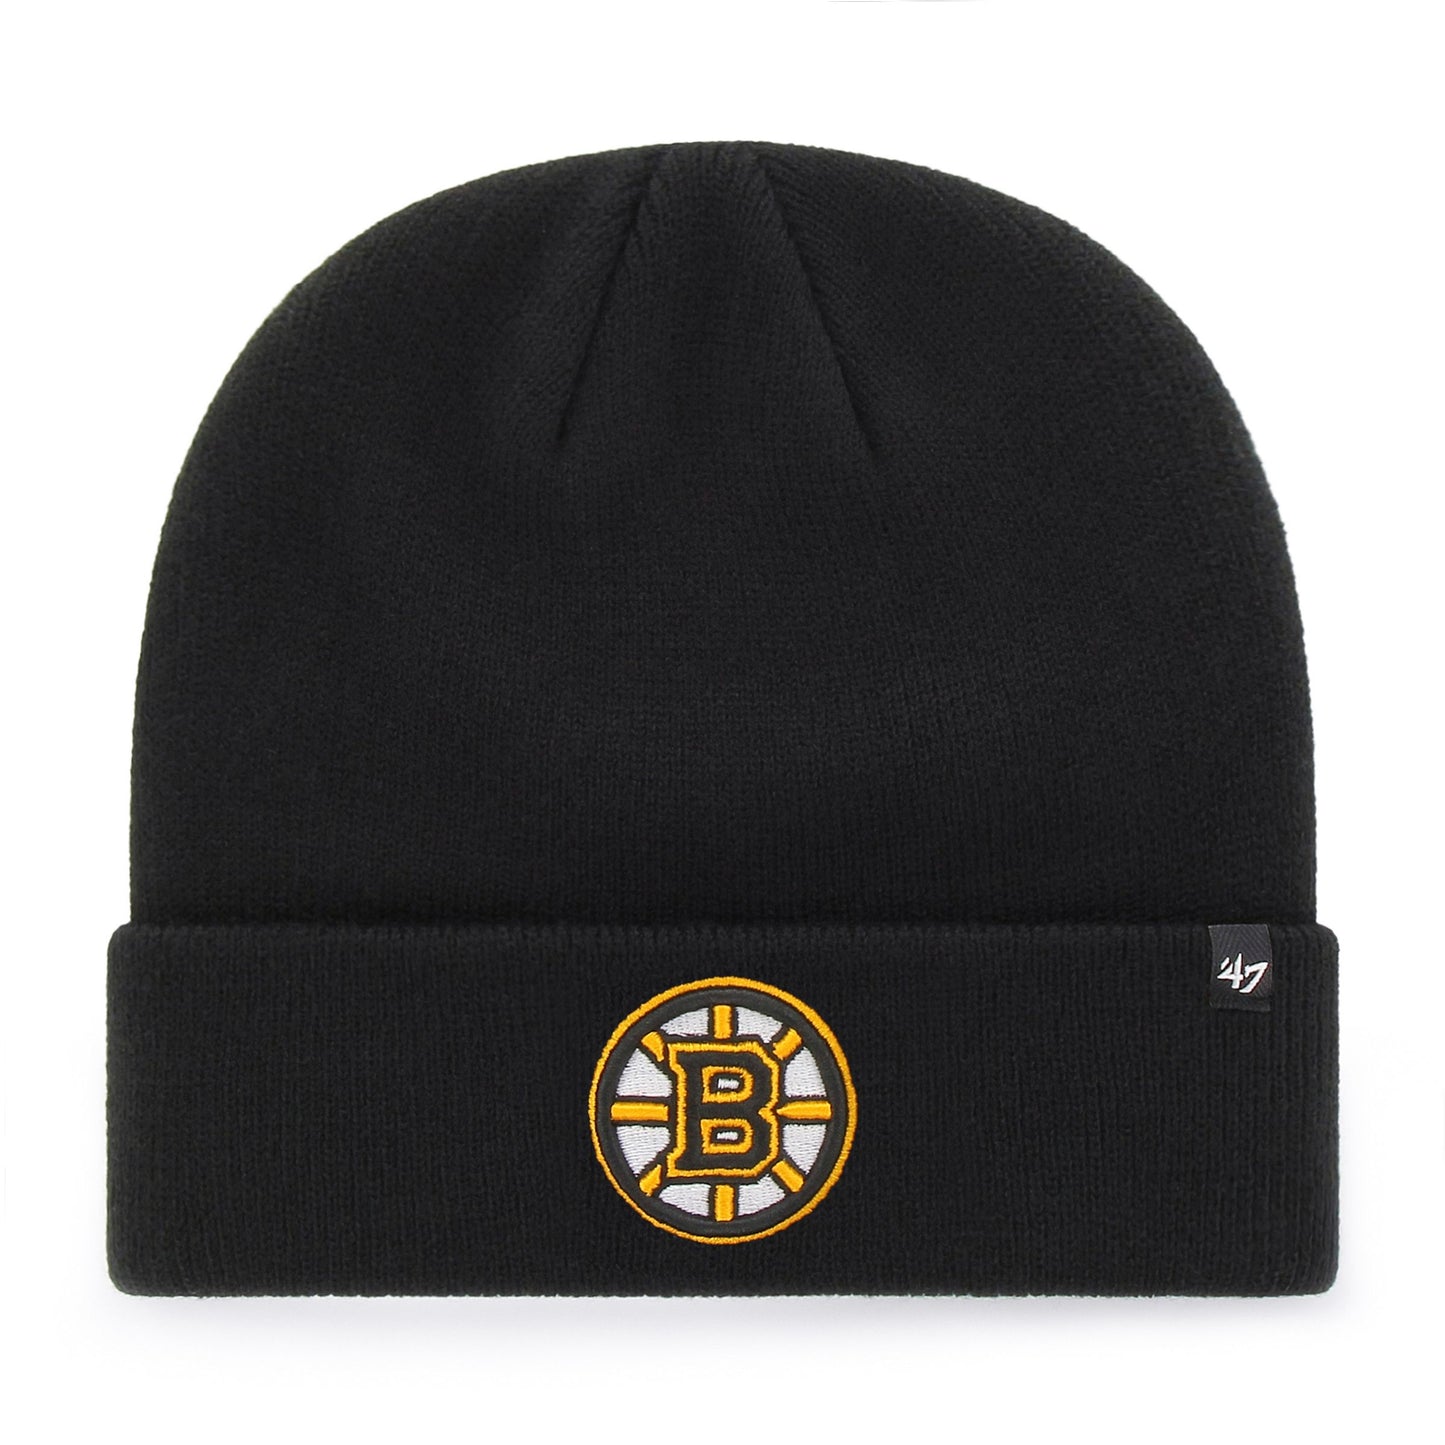 47 Raised Cuff Knit Hat NHL Boston Bruins